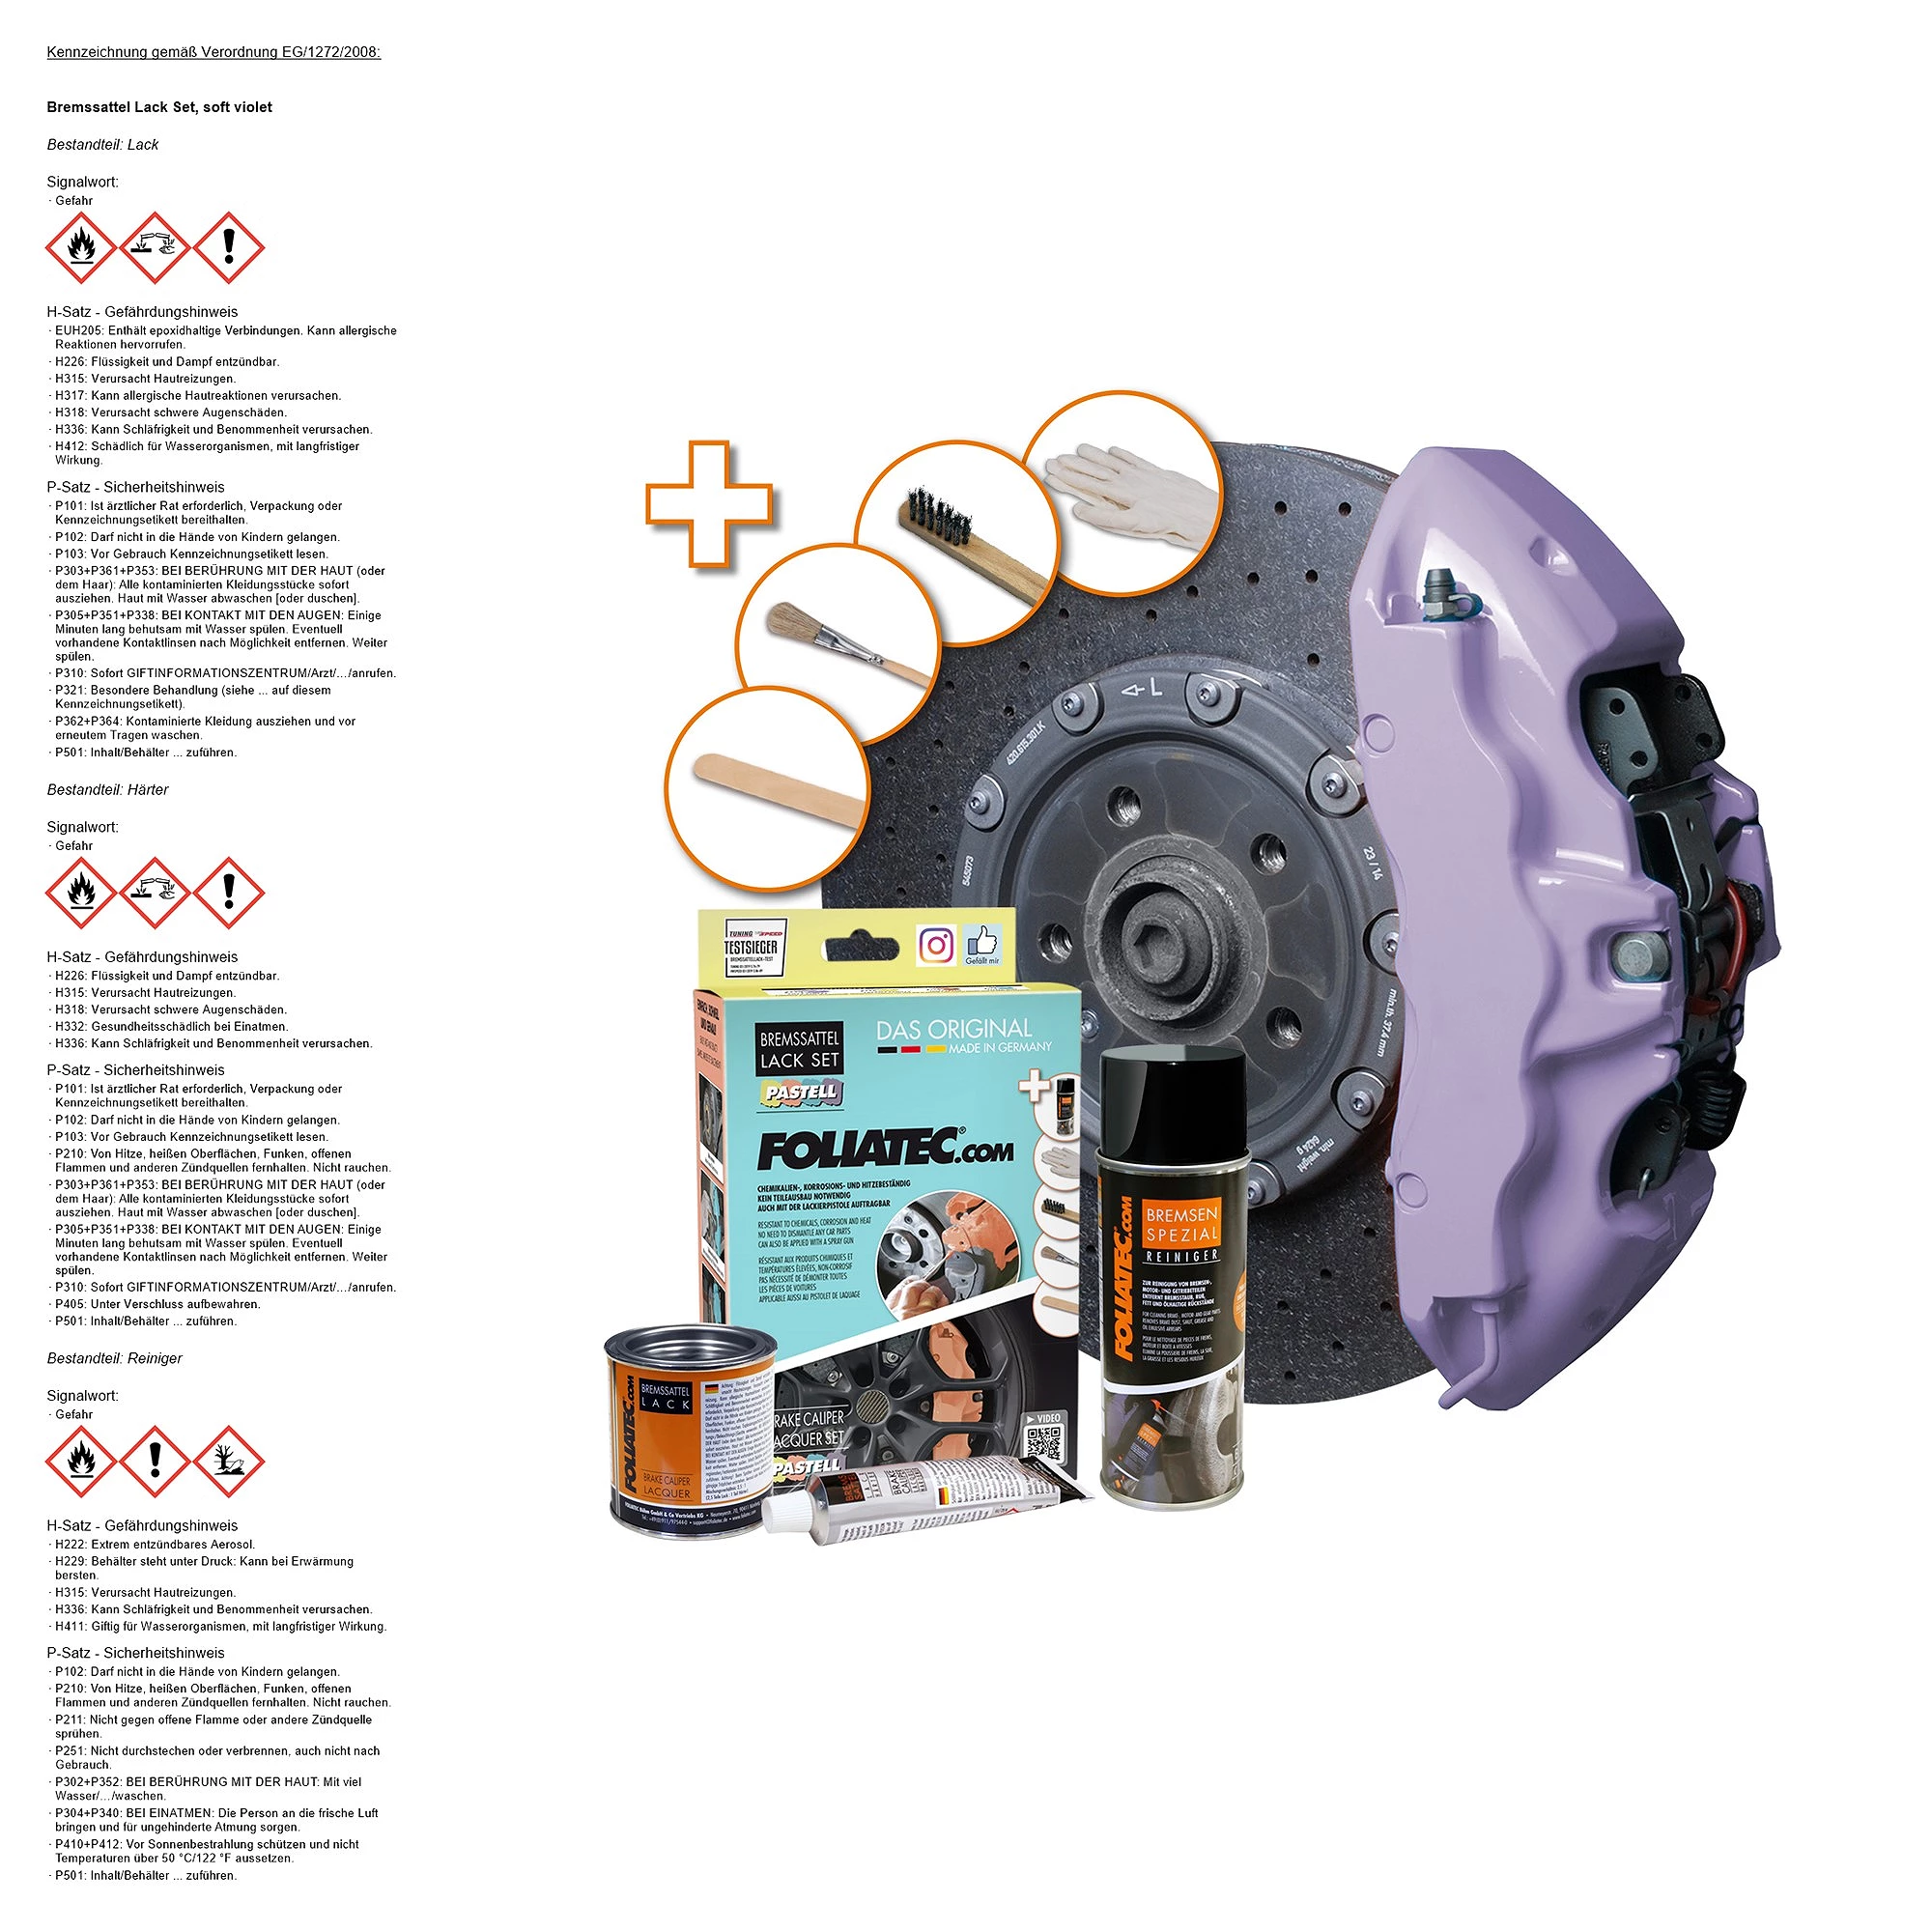 FOLIATEC Bremssattel Lack Set, soft violet 2220 günstig online kaufen